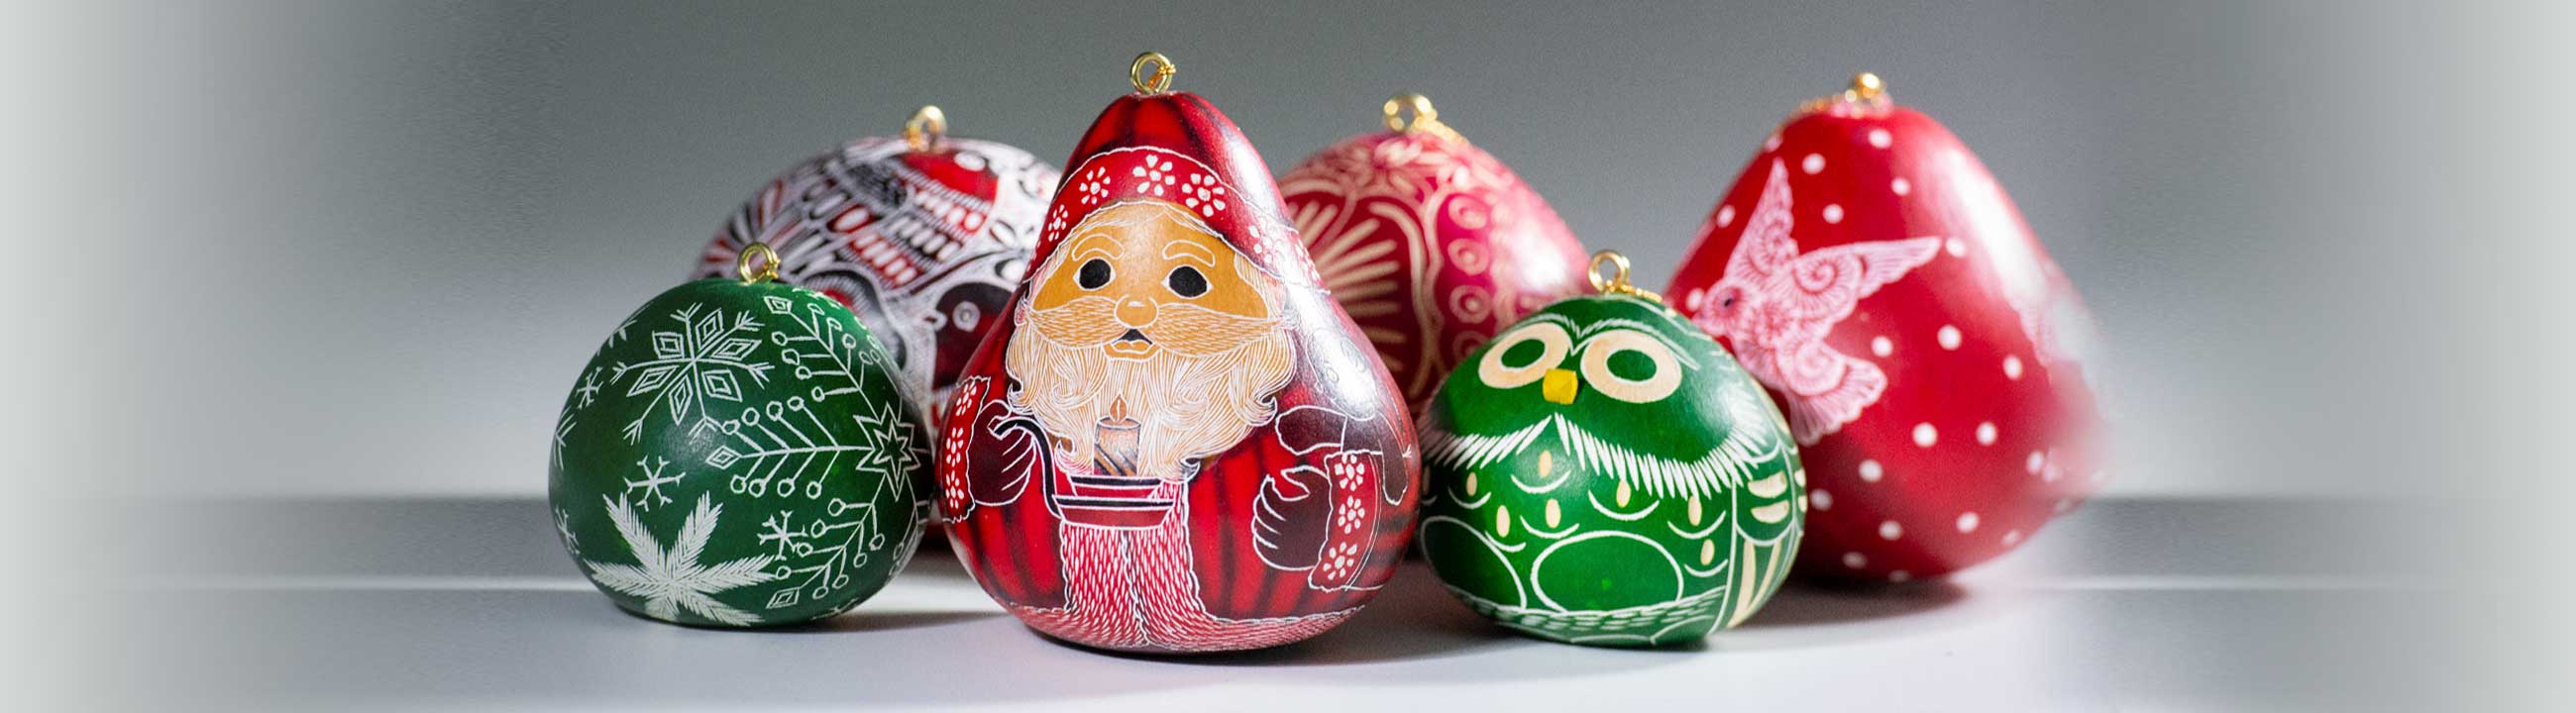 christmas gourd ornaments